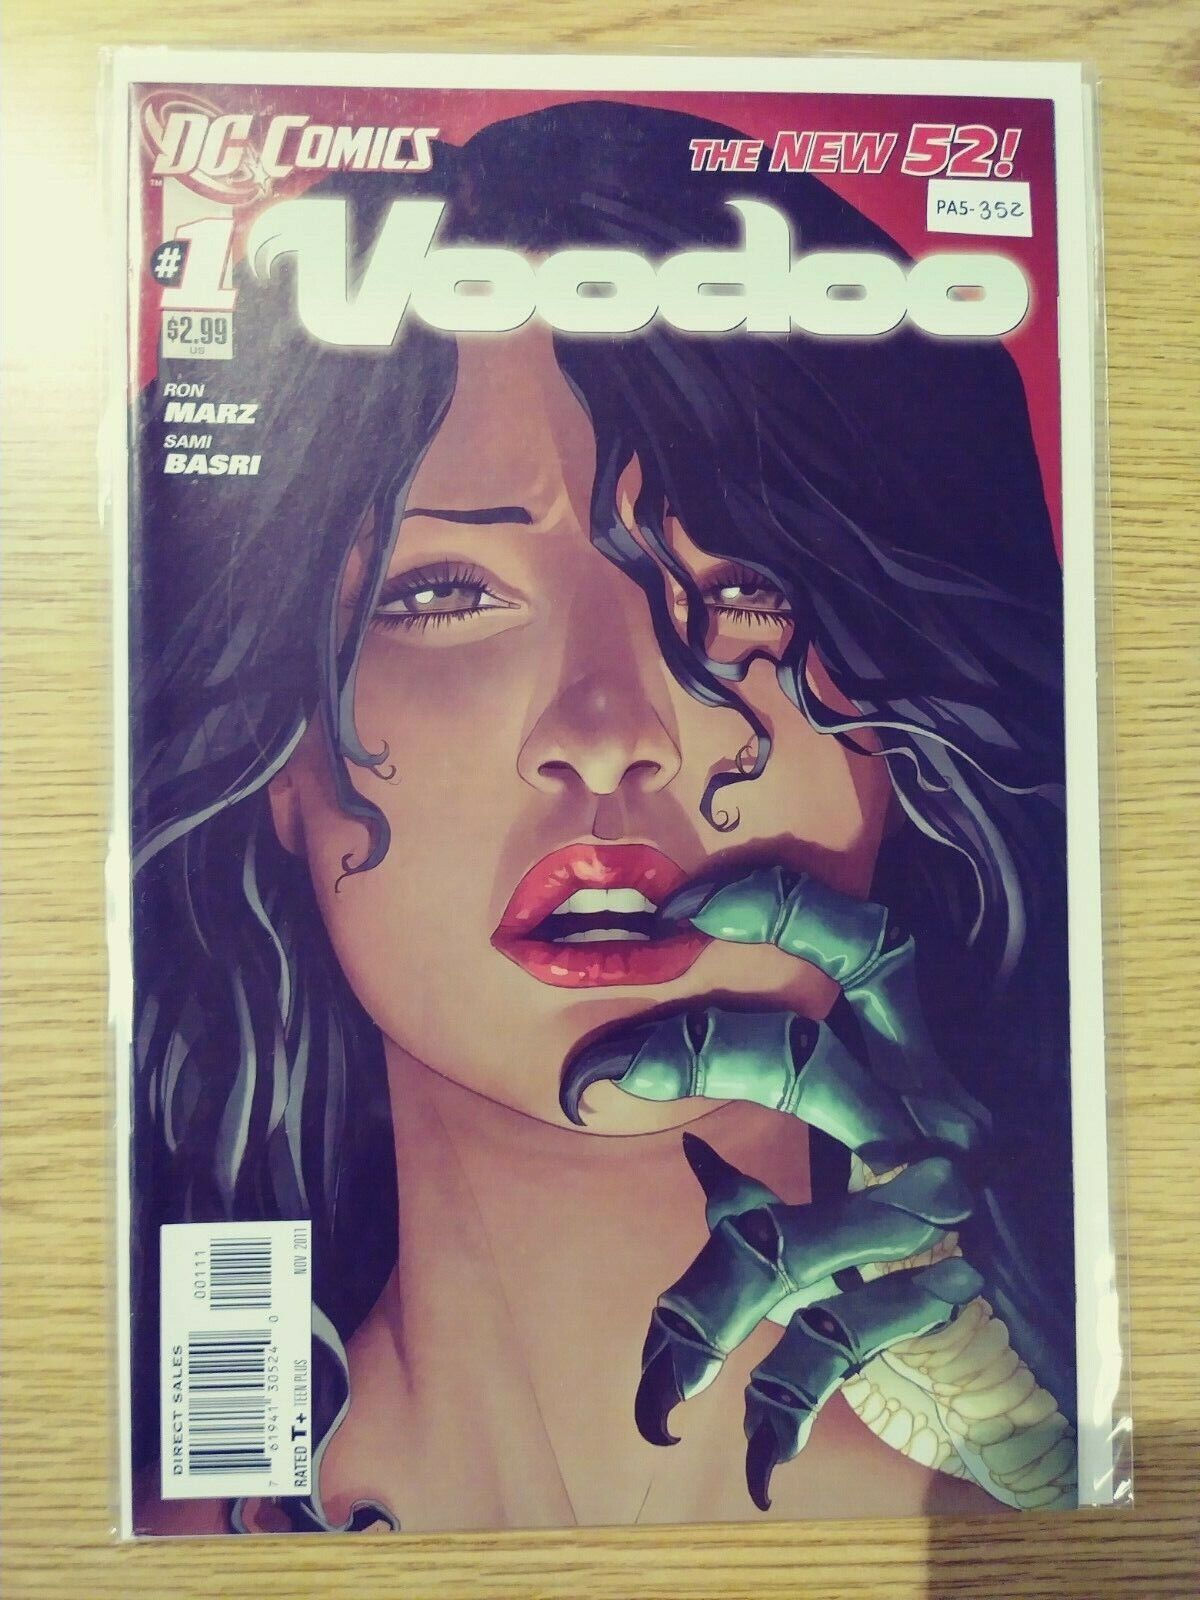 Voodoo vol.2 #1 2011 High Grade 9.2 DC Comic Book PA5-352